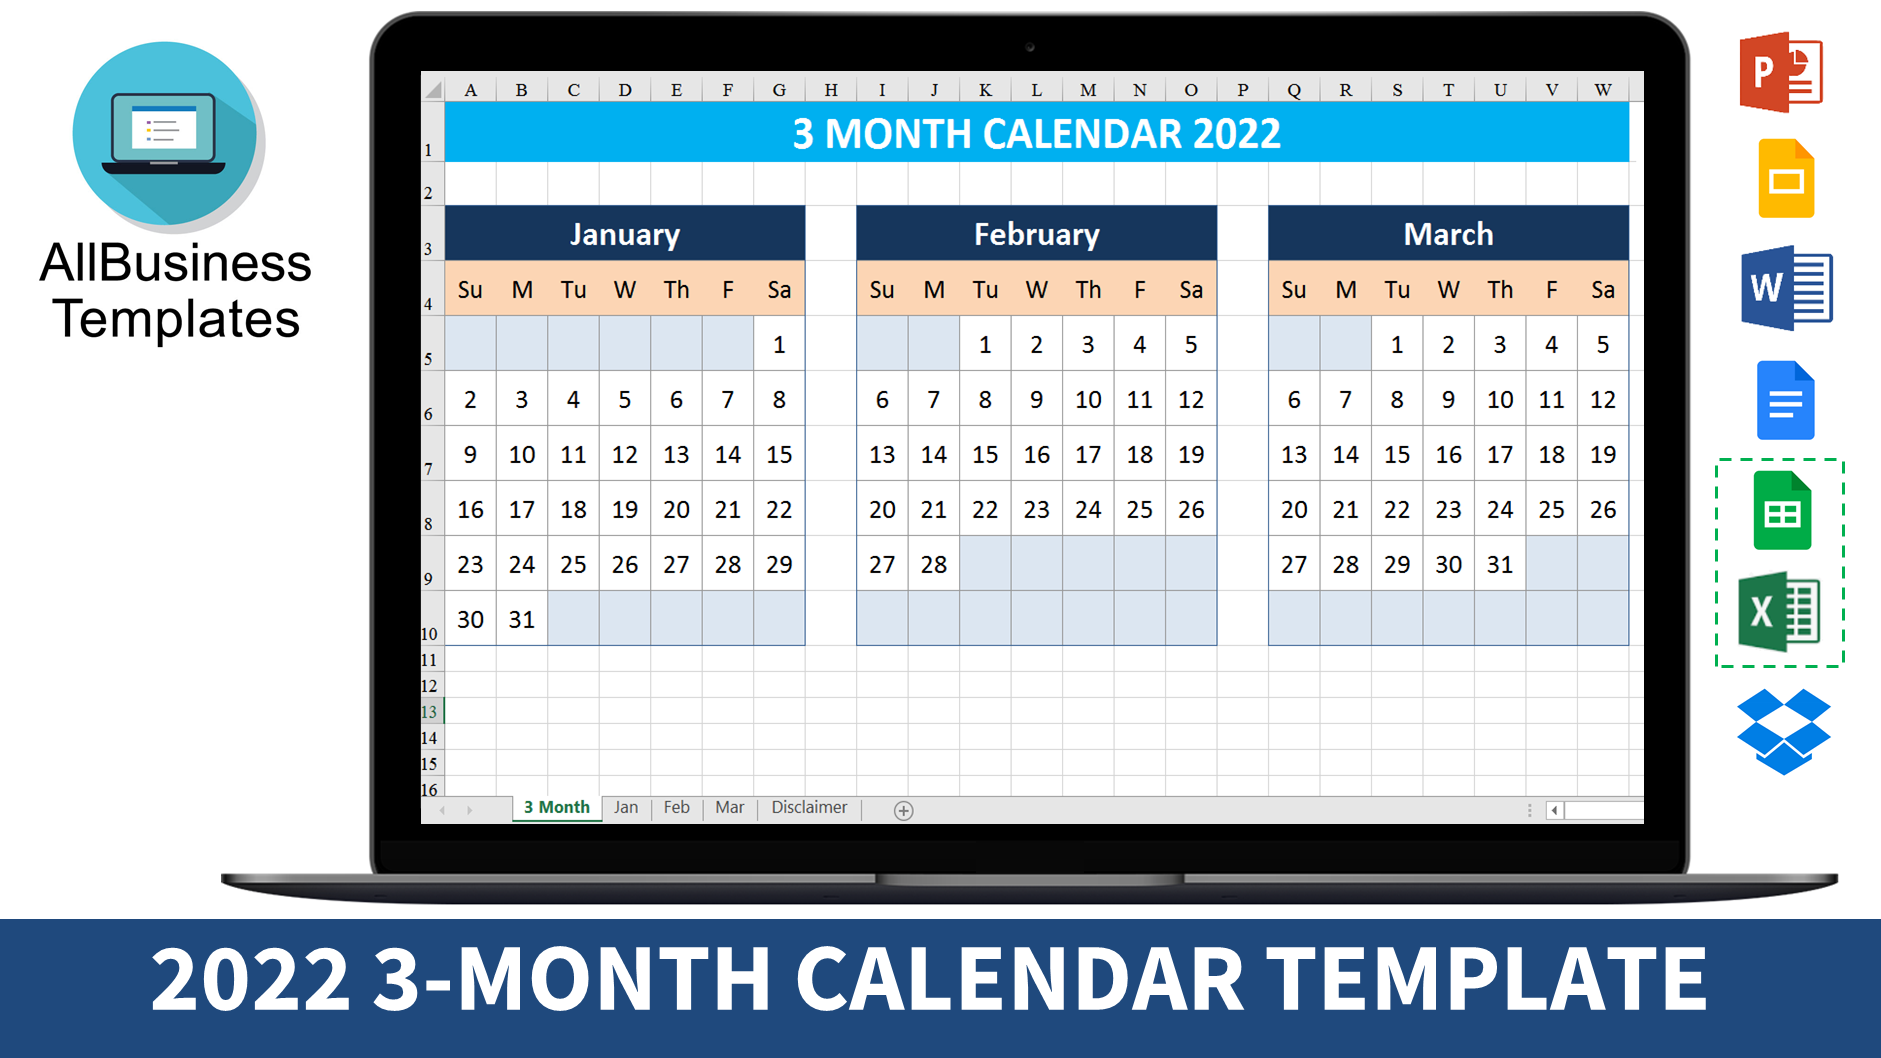 3 month calendar 2022 plantilla imagen principal